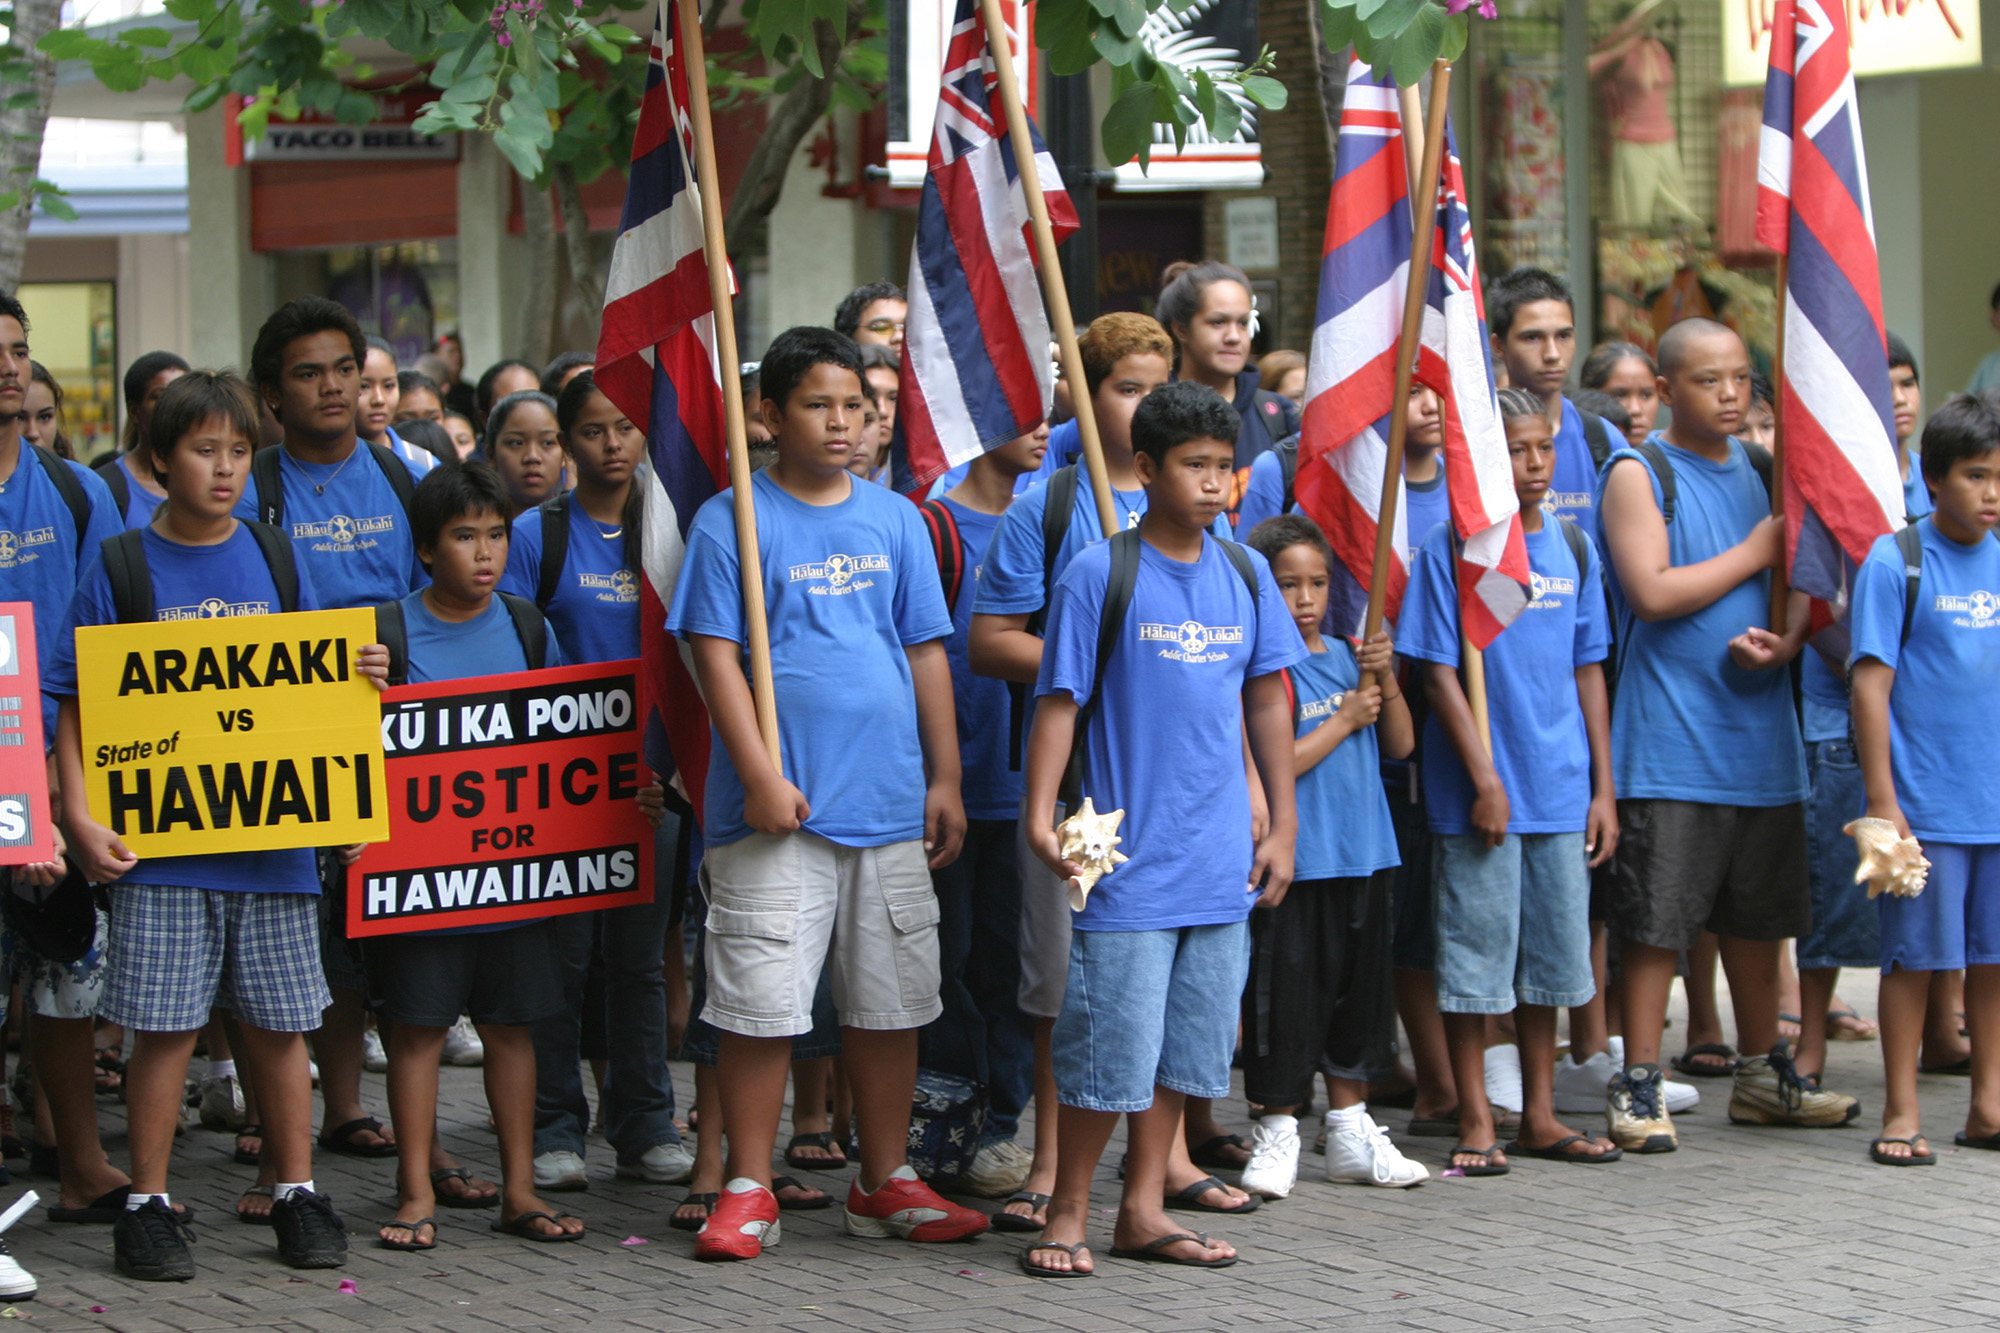 [Students in action] Hālau Lōkahi charter school